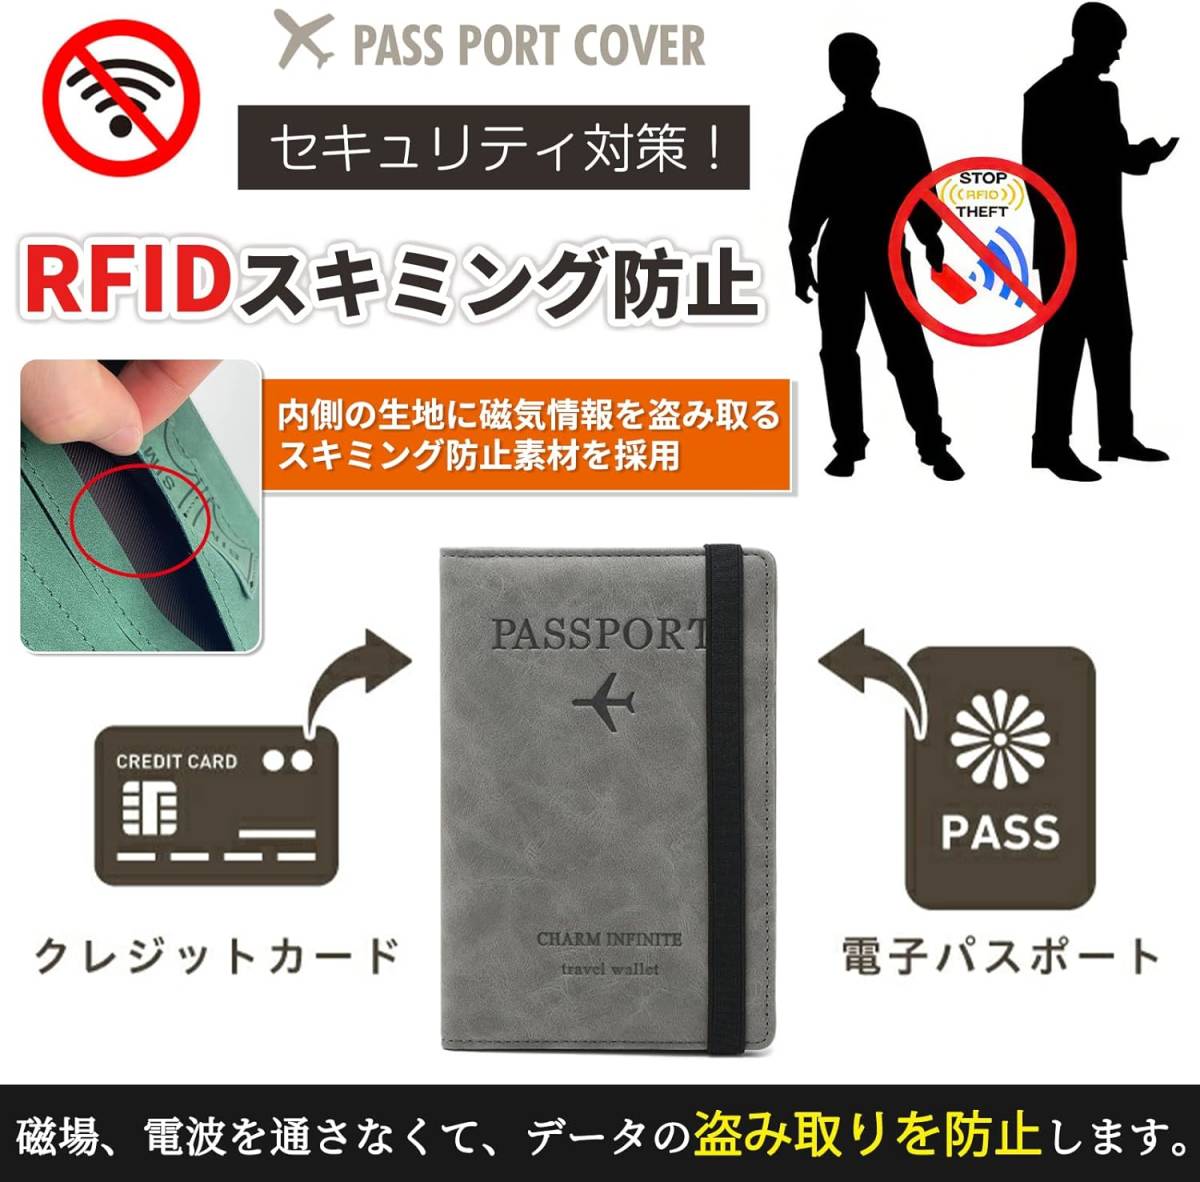 [GOKEI] パスポートケース スキミング防止 レザー 上質 パスポートカバー カバー パスポート 多機能収納 盗難防止 セキュの画像3